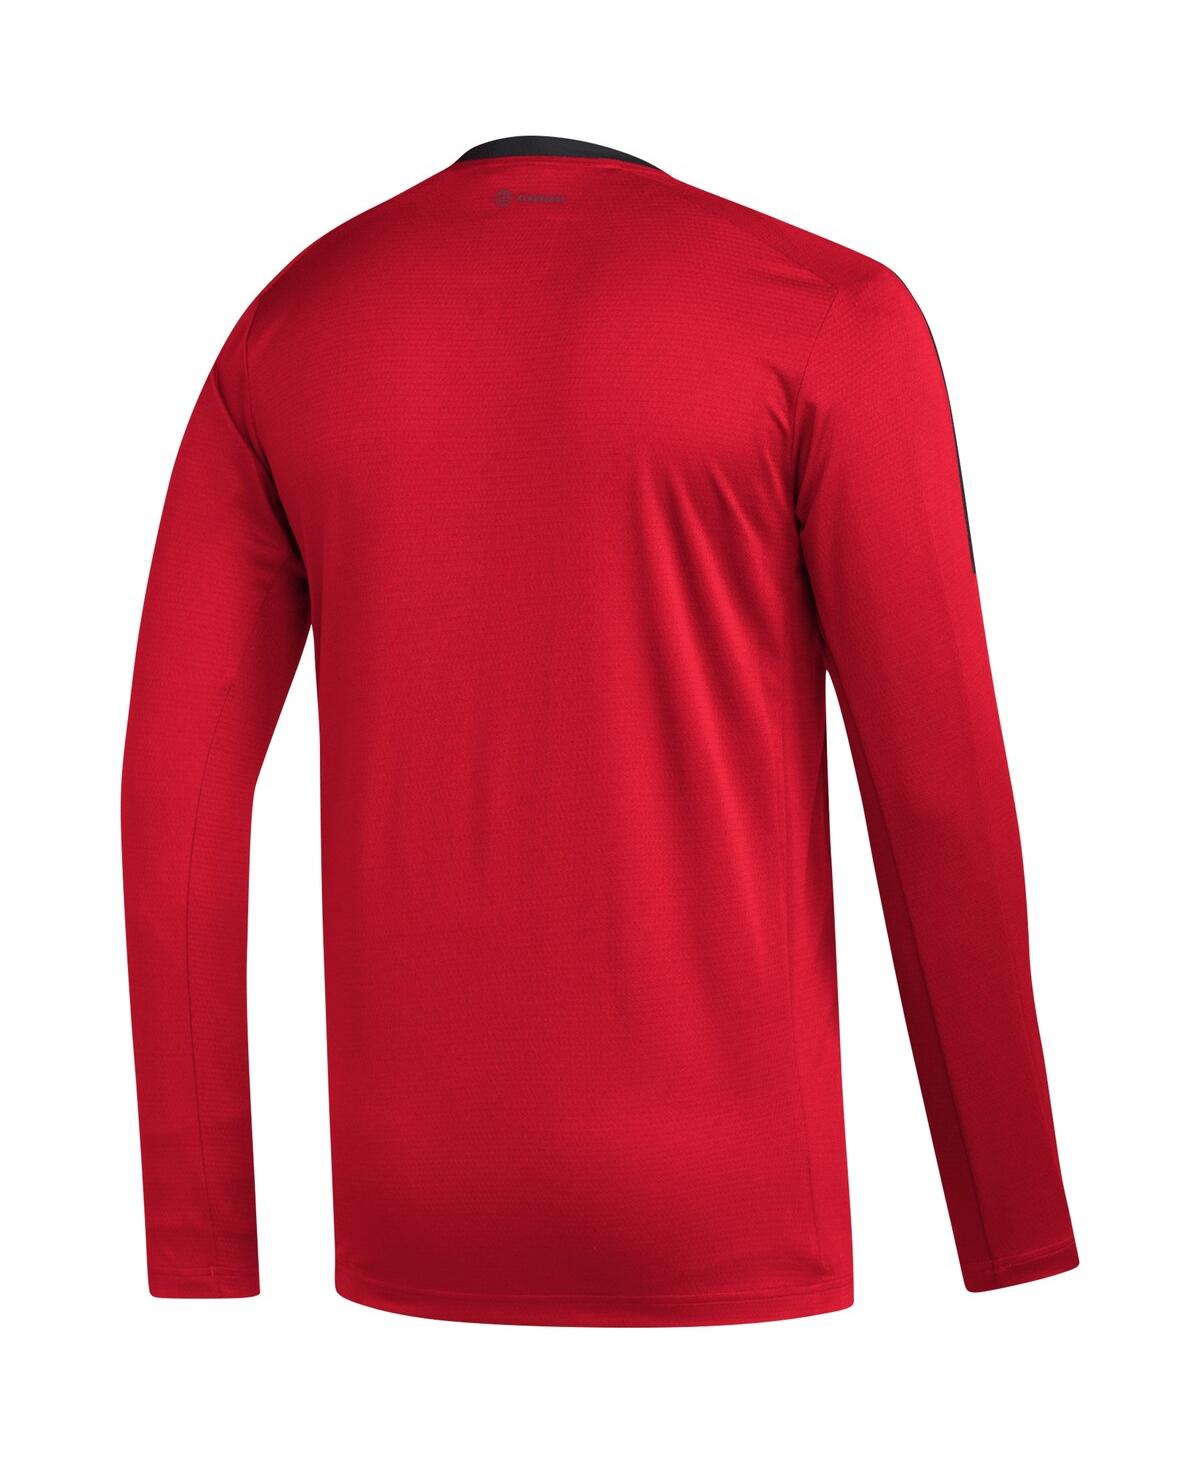 Shop Adidas Originals Men's Adidas Red Carolina Hurricanes Aeroready Long Sleeve T-shirt